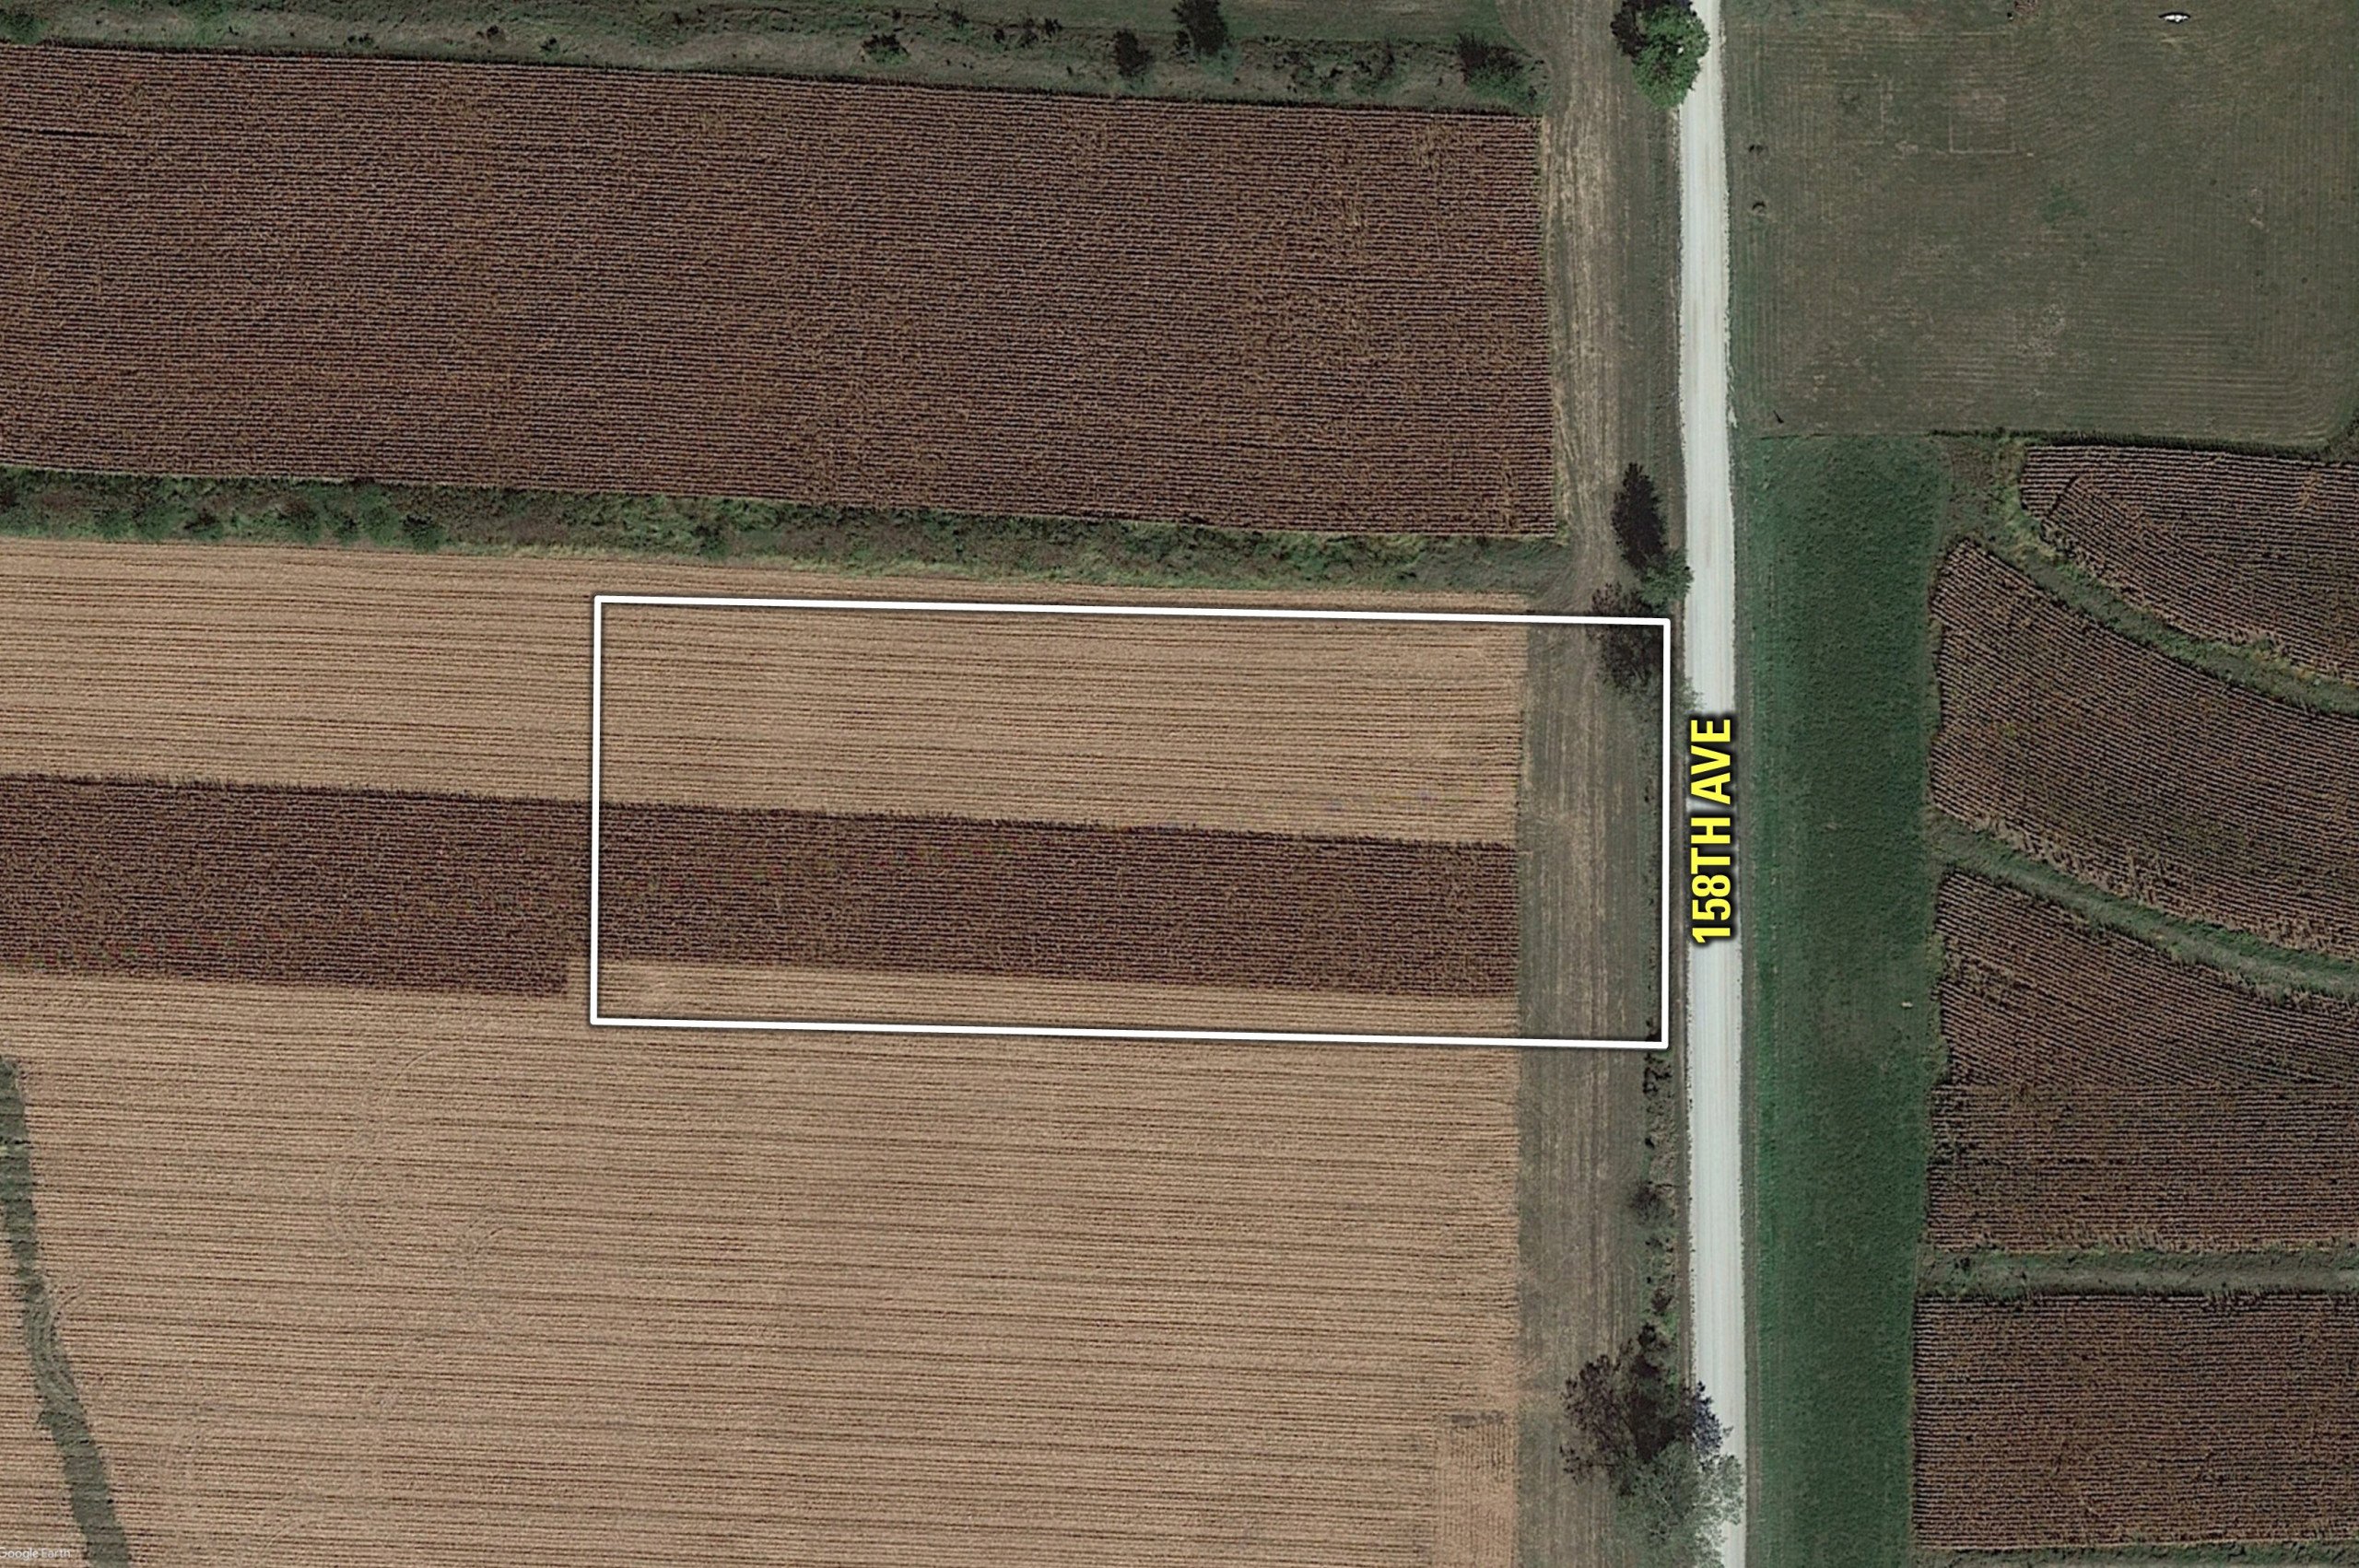 land-warren-county-iowa-2-acres-listing-number-16416-Moorman North Lot-0.jpg